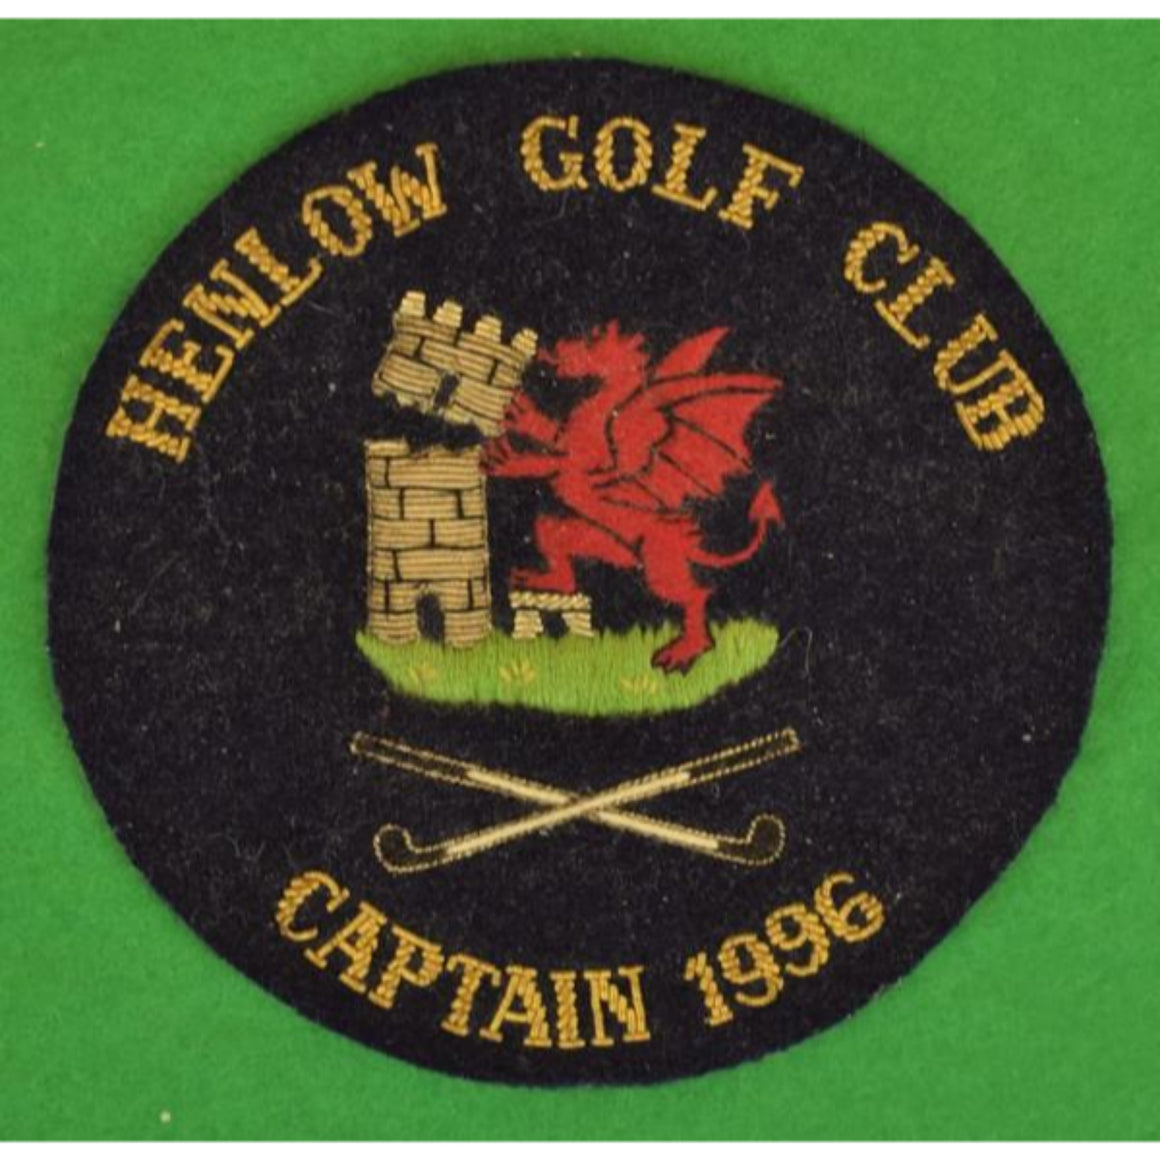 "Henlow (Eng.) Golf Club Captain 1996 Blazer Badge"